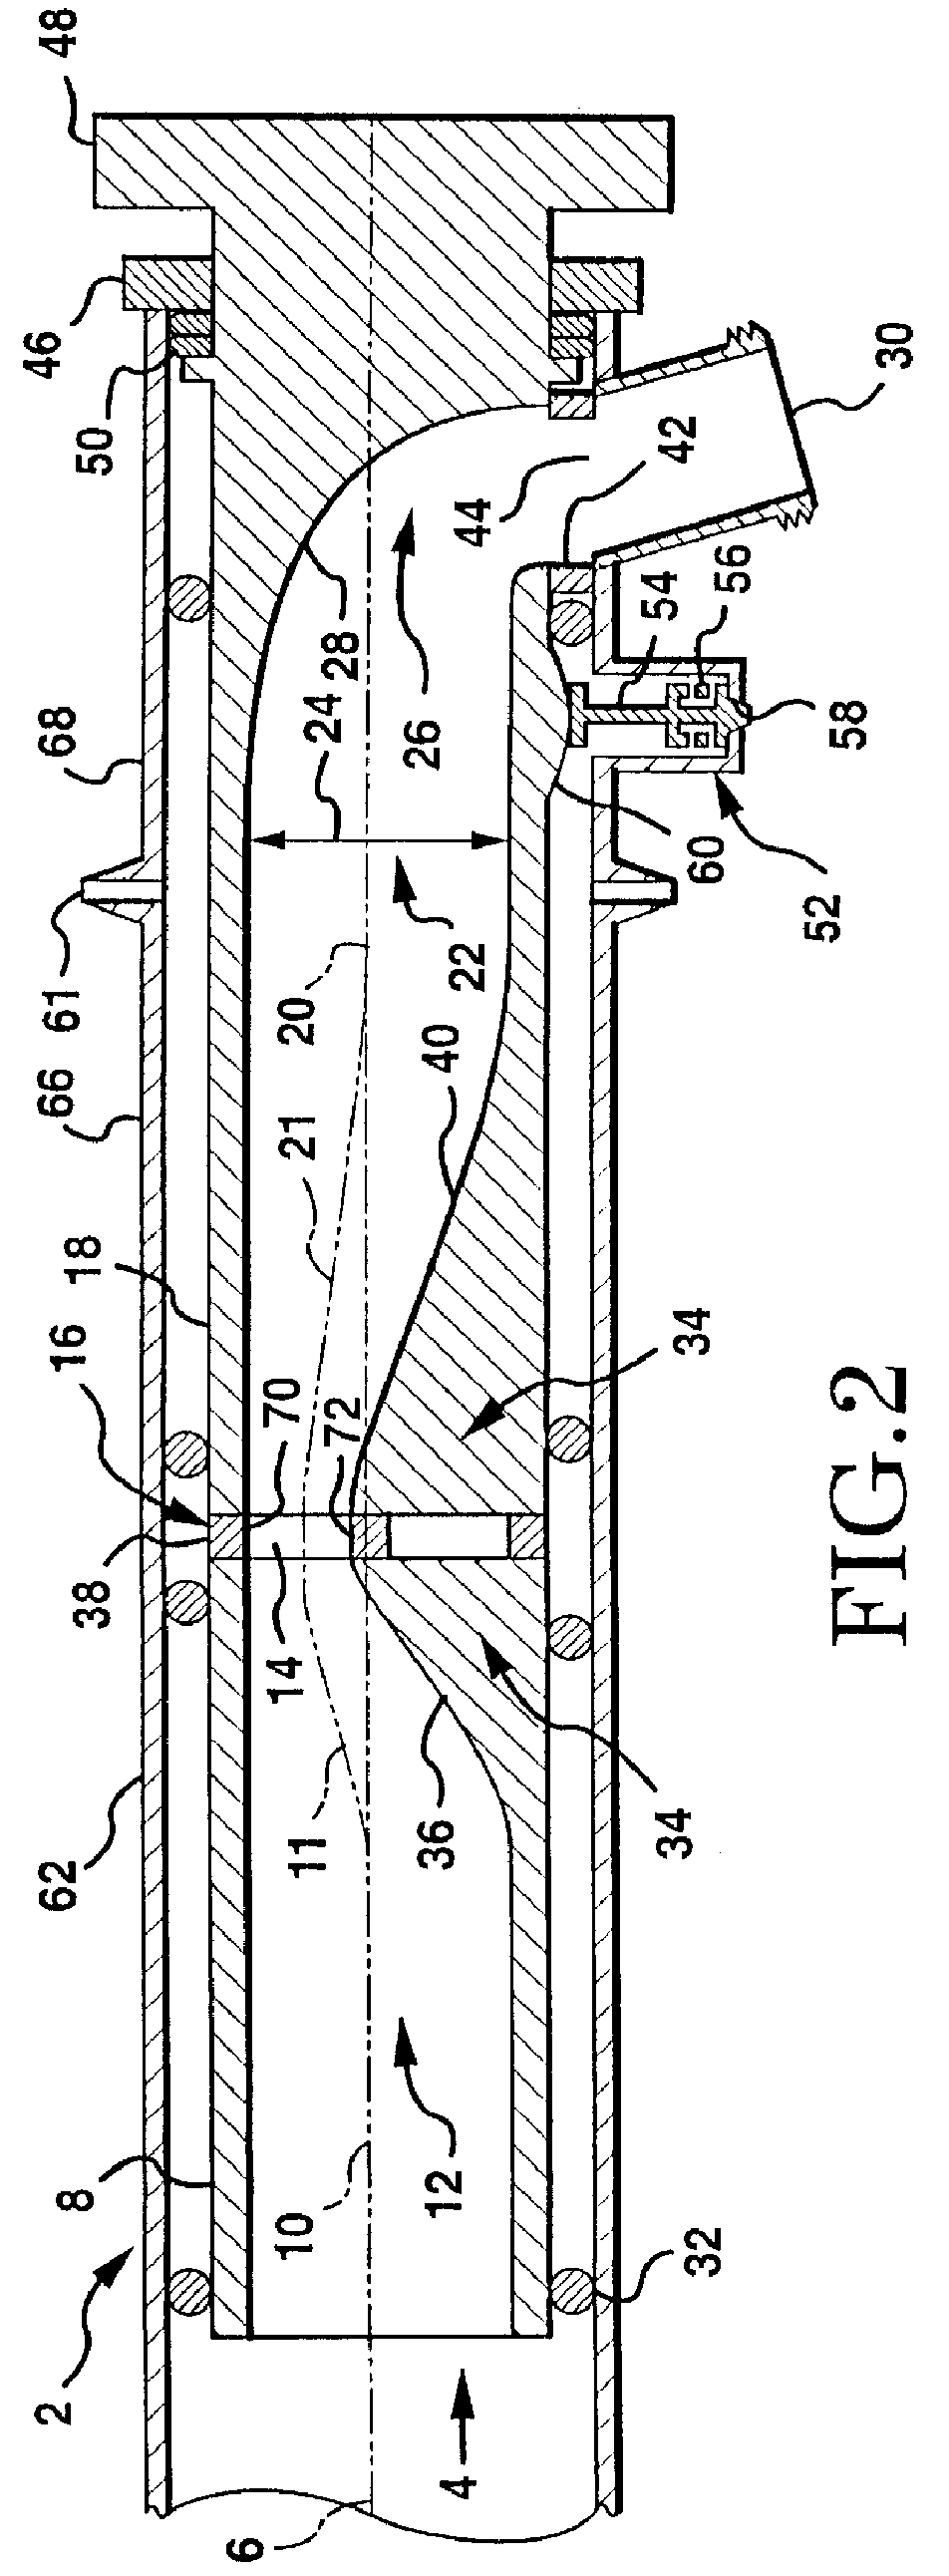 Flow, split Venturi, axially-rotated valve